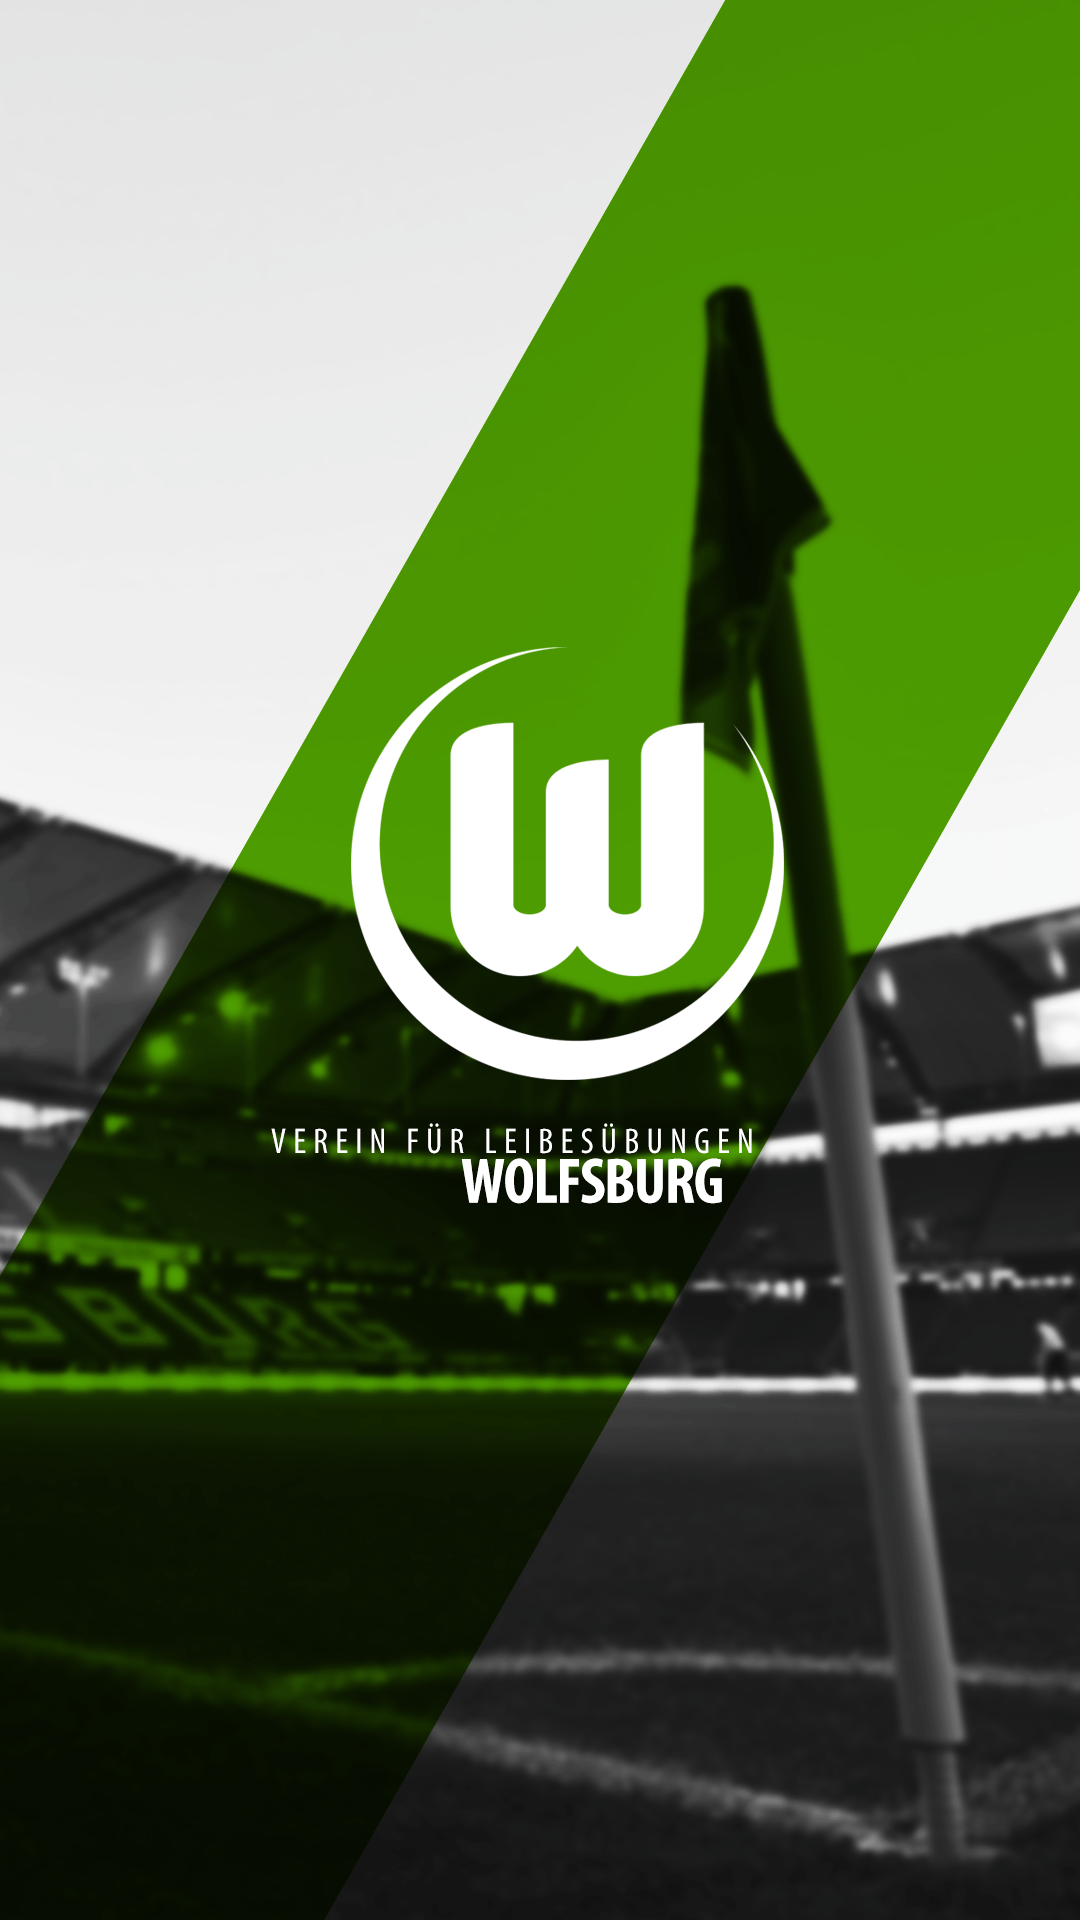 Mobile Vfl Wolfsburg Wallpaper. Full HD Picture